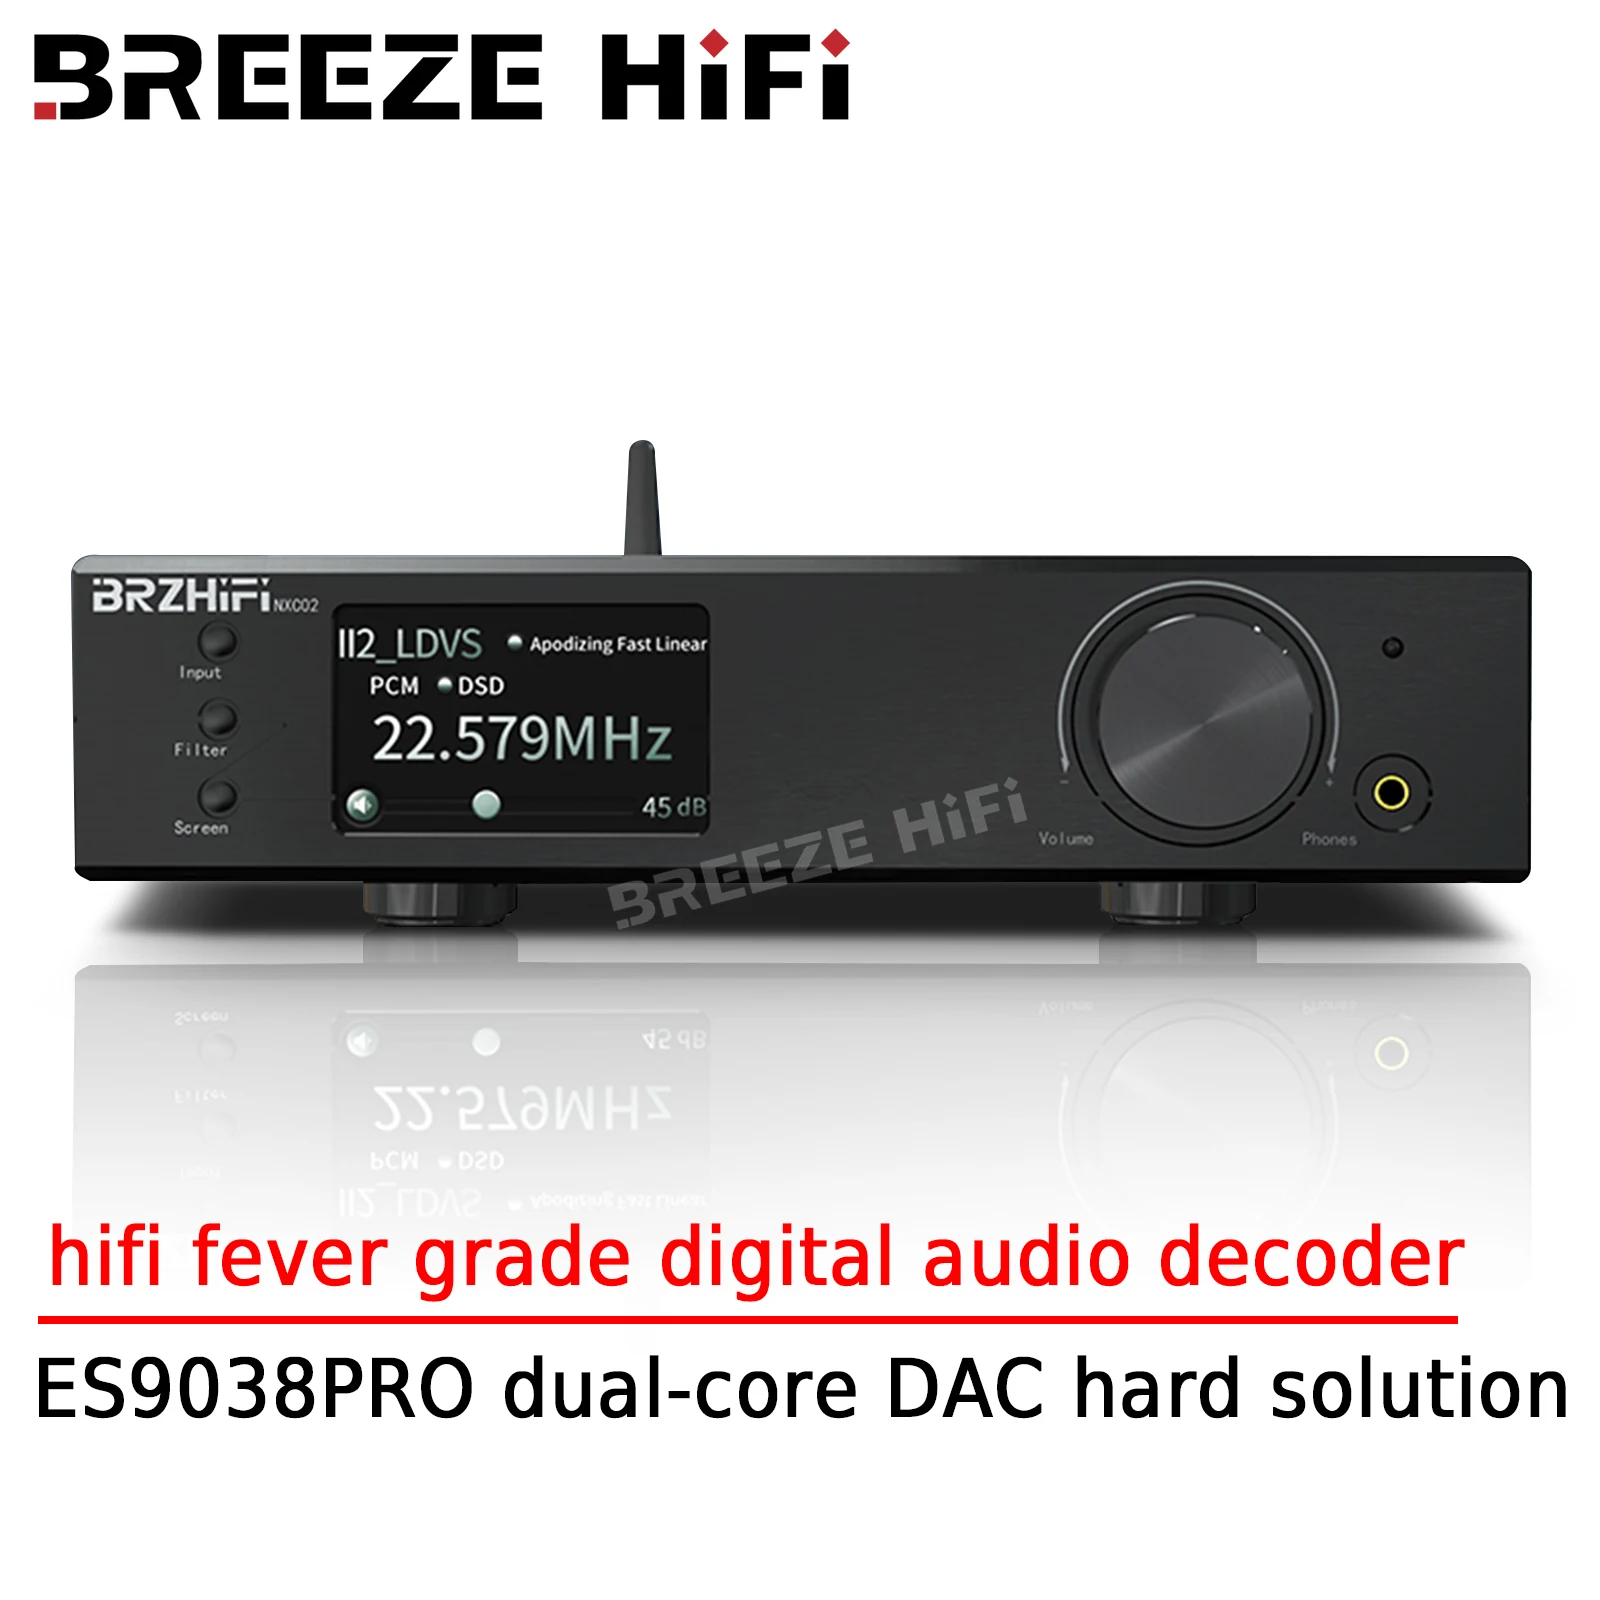 

BREEZE HIFI ES9038PRO Dual Core Digital Audio Decoder Hifi Fever Grade DAC Hard Decode DSD512 Bluetooth LDAC